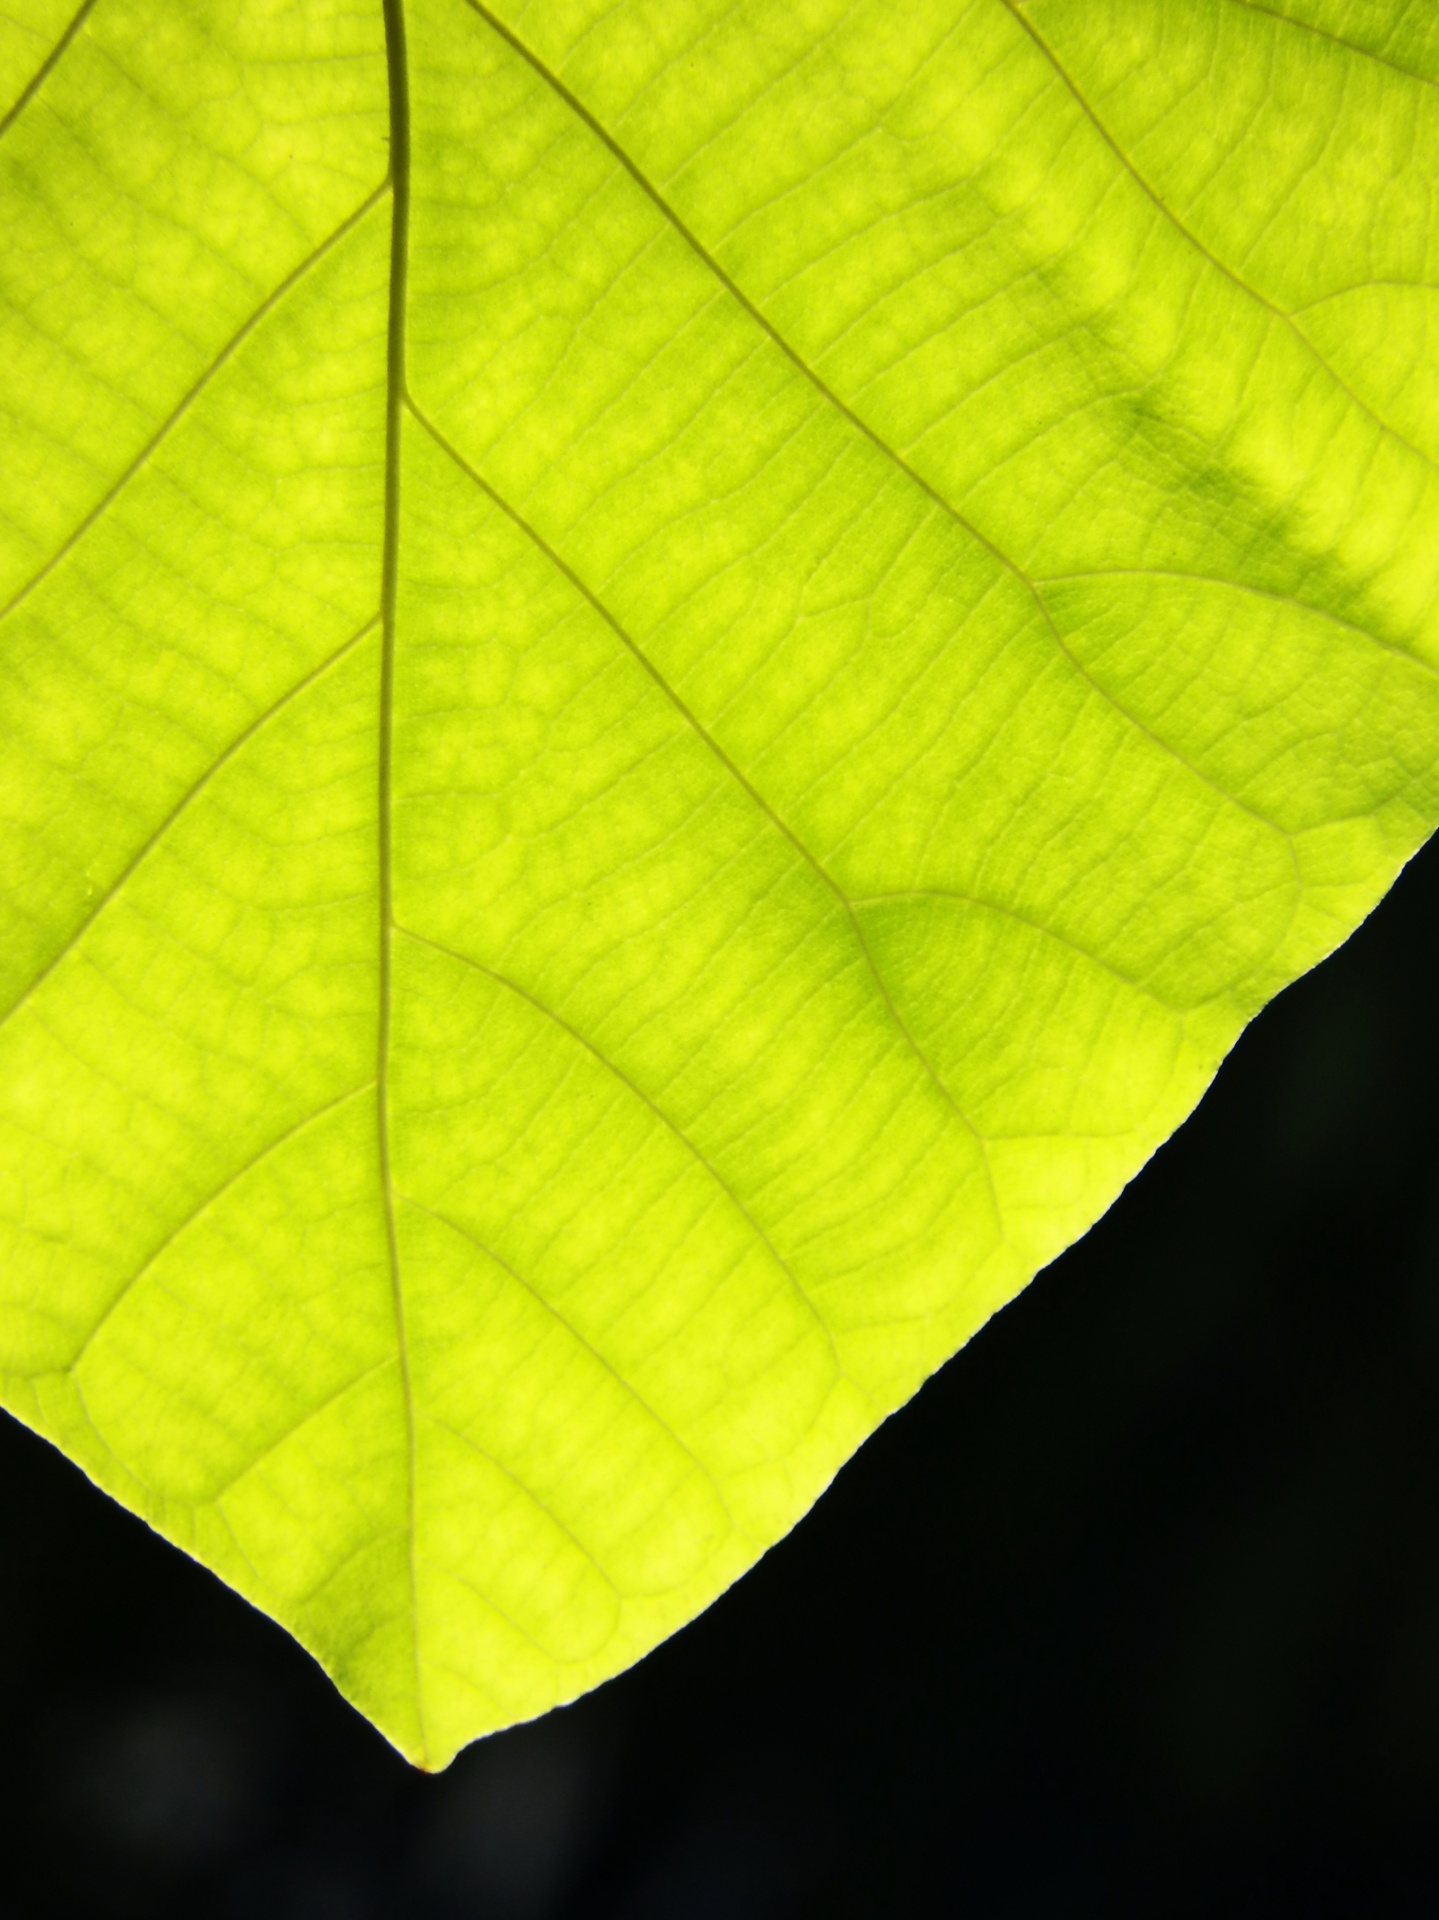 background leaf closeup free photo